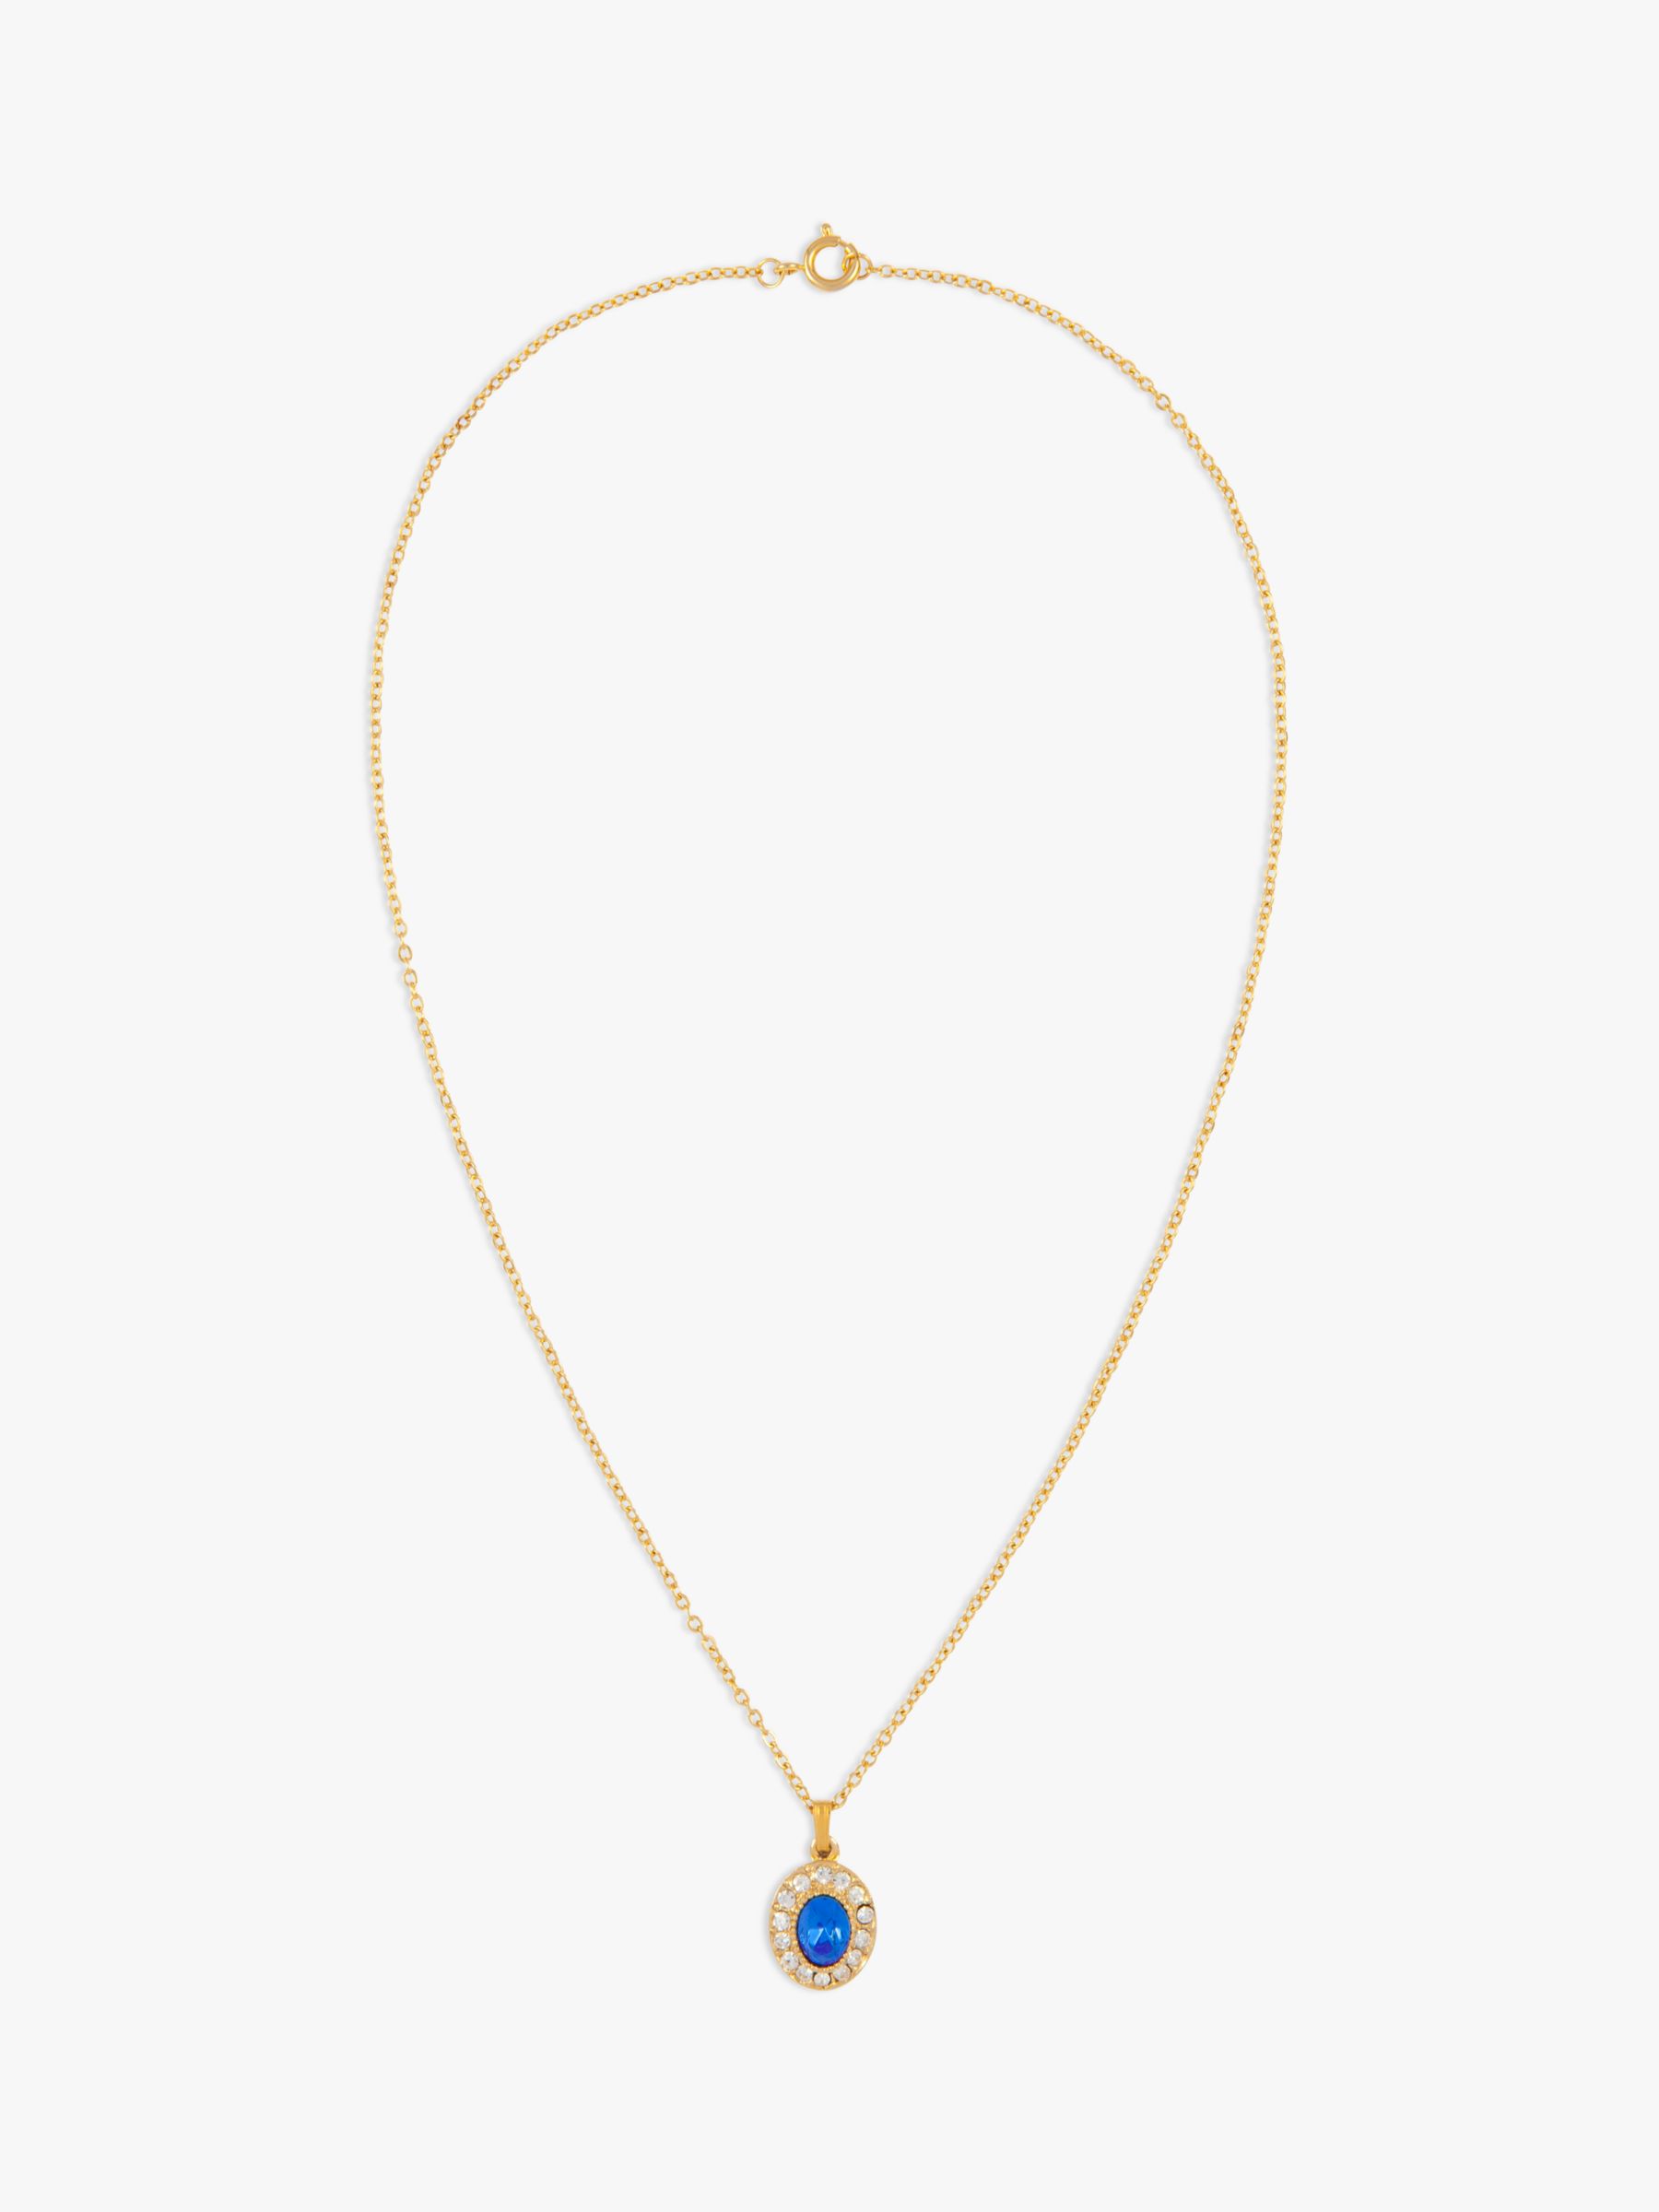 Susan Caplan Vintage Rediscovered Collection Gold Plated Swarovski Crystal Oval Pendant Necklace, Gold/Blue